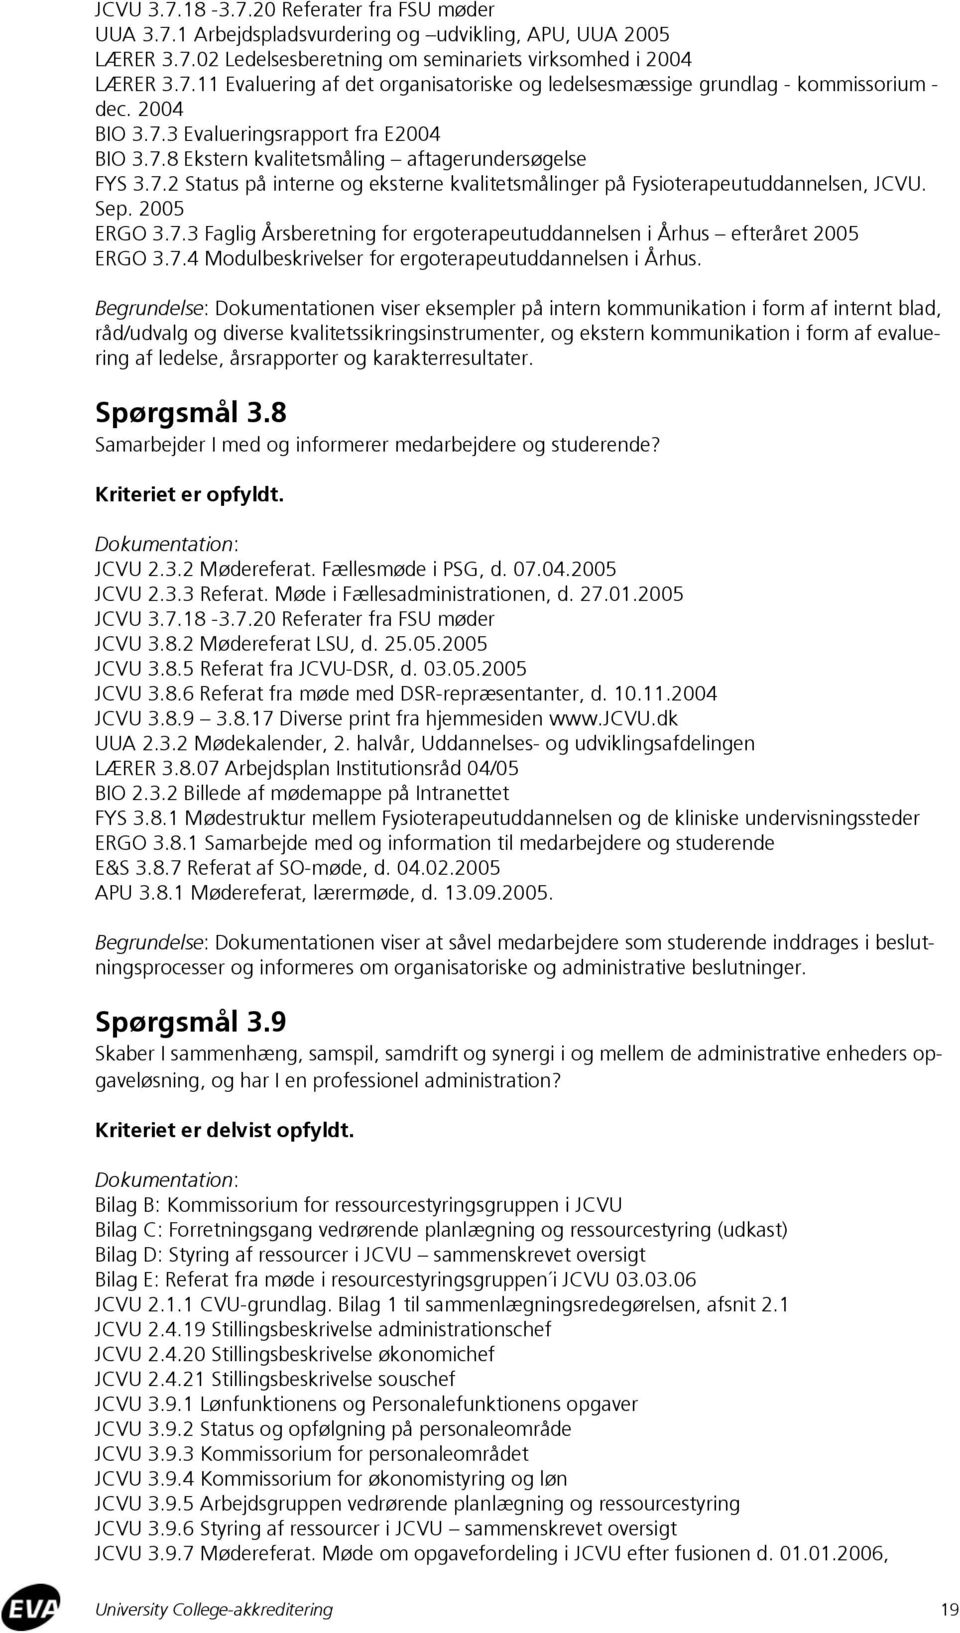 2005 ERGO 3.7.3 Faglig Årsberetning for ergoterapeutuddannelsen i Århus efteråret 2005 ERGO 3.7.4 Modulbeskrivelser for ergoterapeutuddannelsen i Århus.